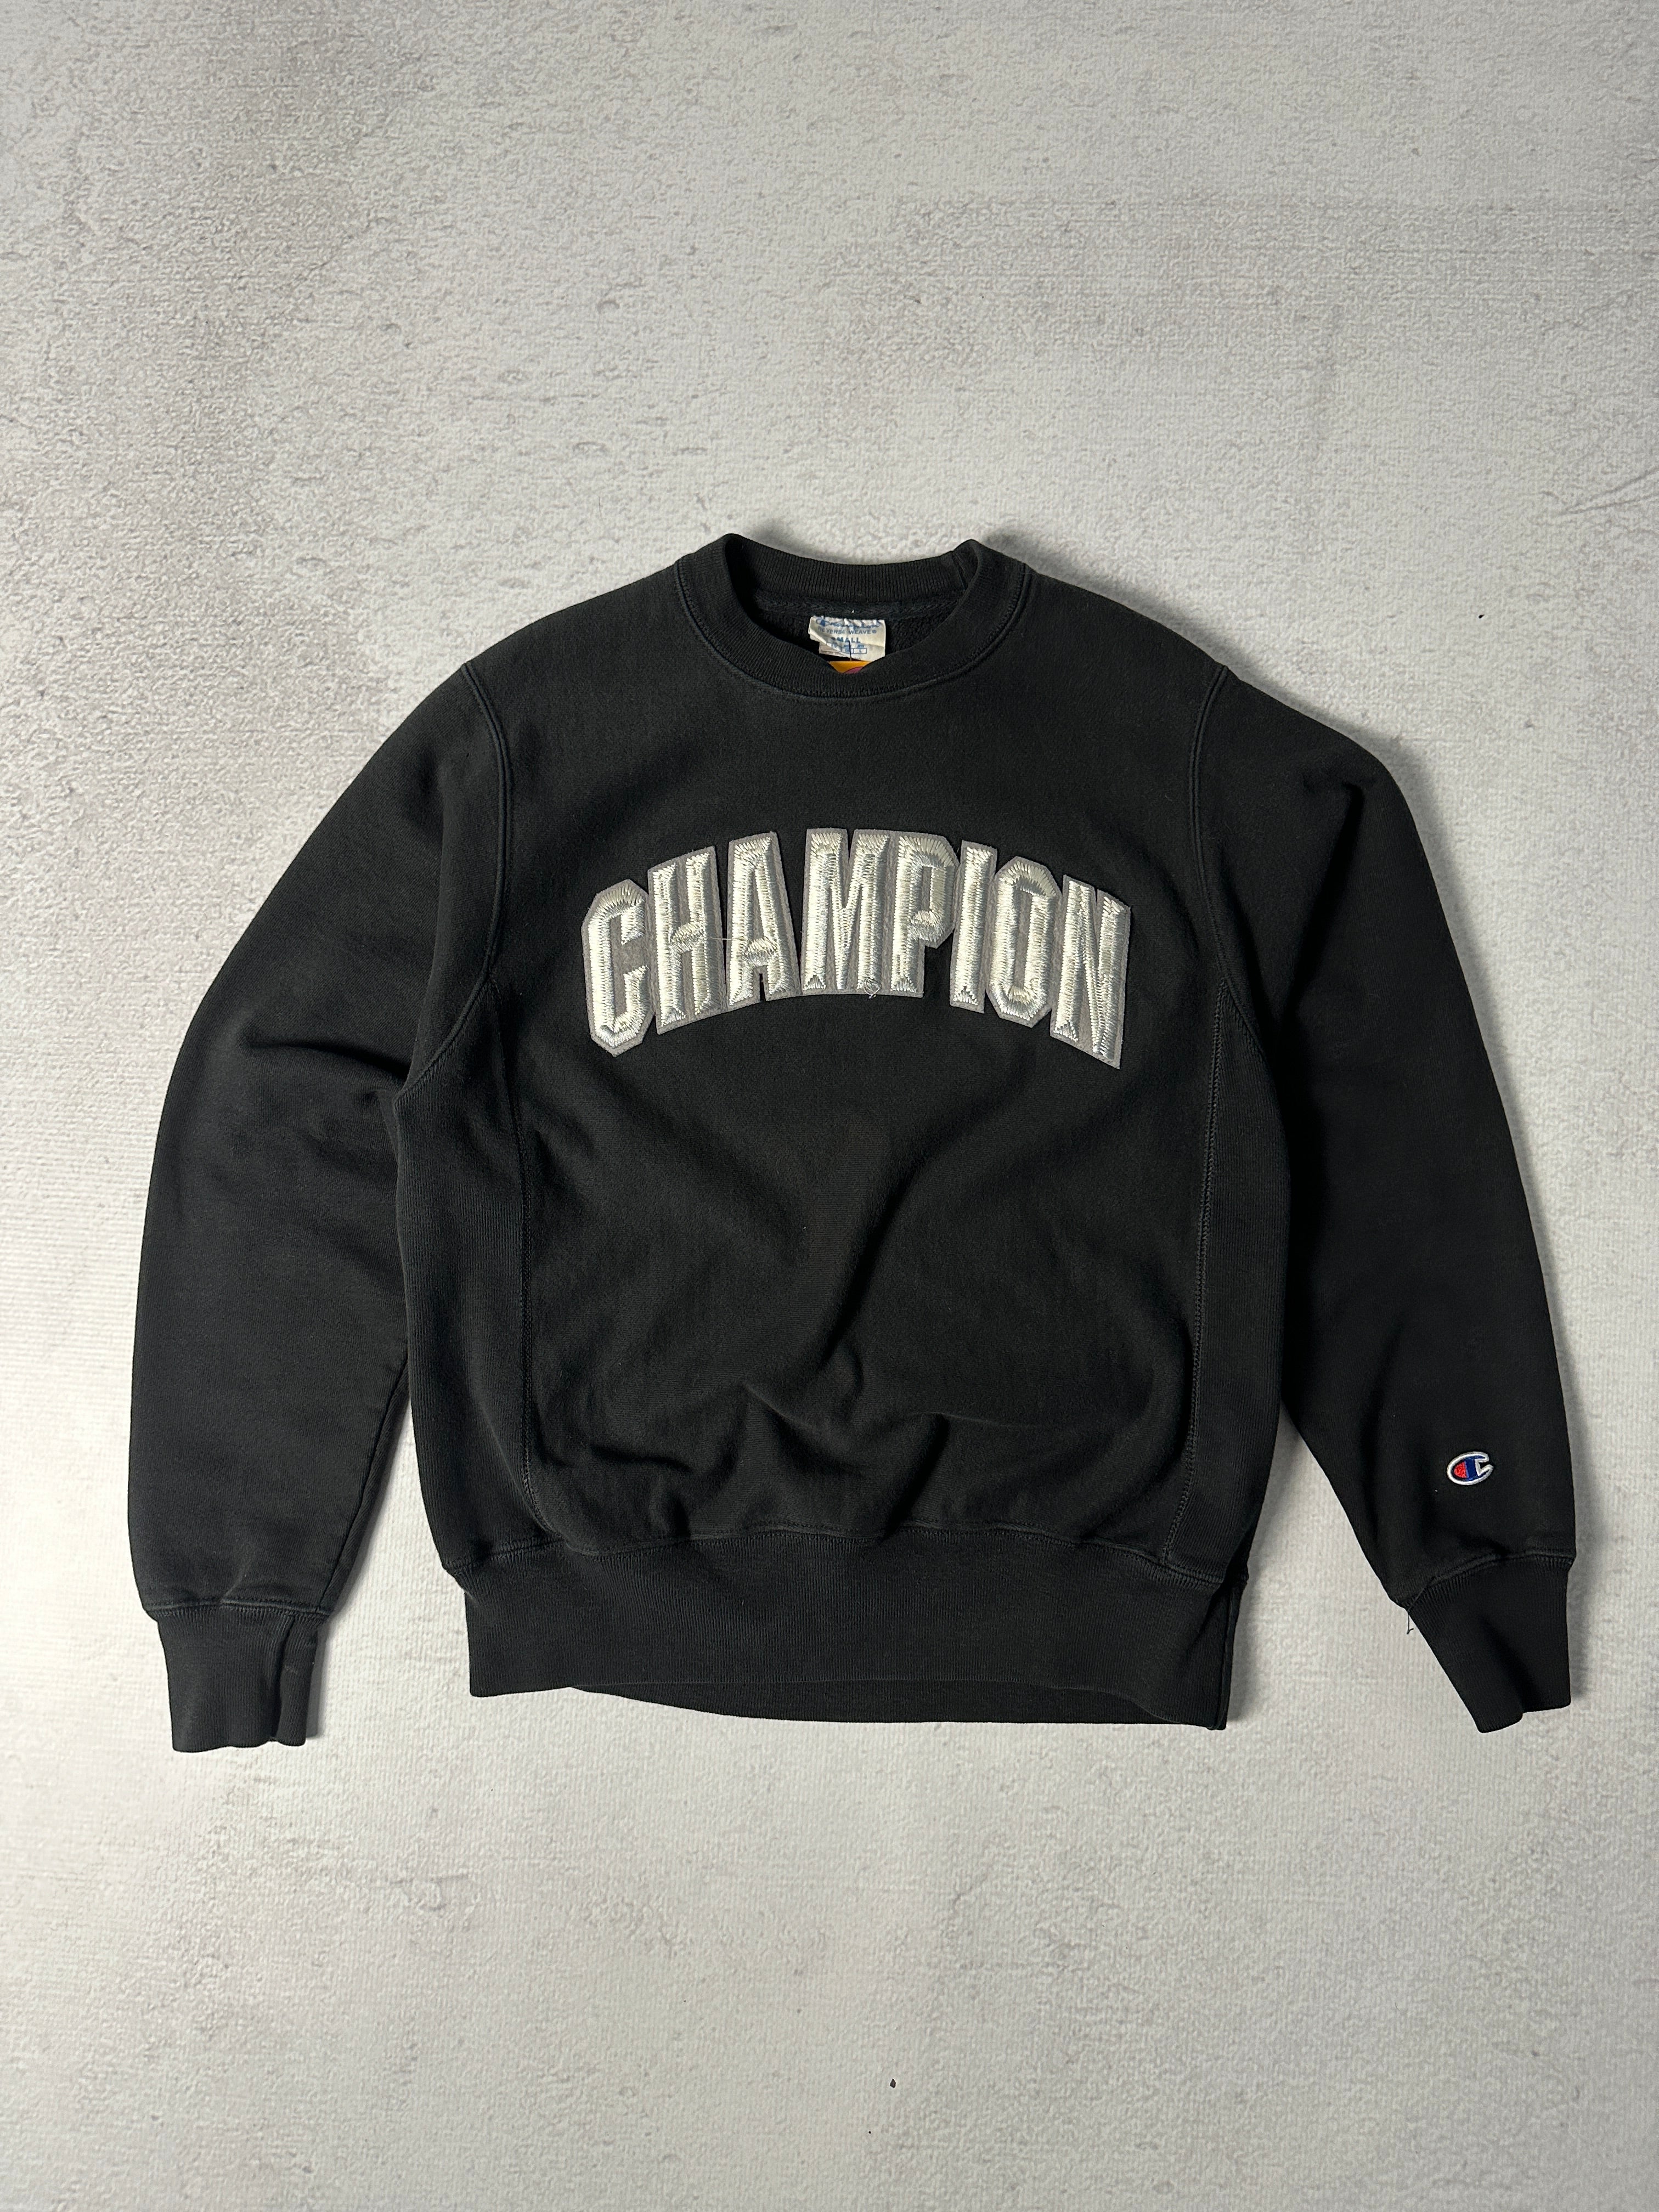 Champion Reverse Weave Crewneck Sweatshirt - Men's Small